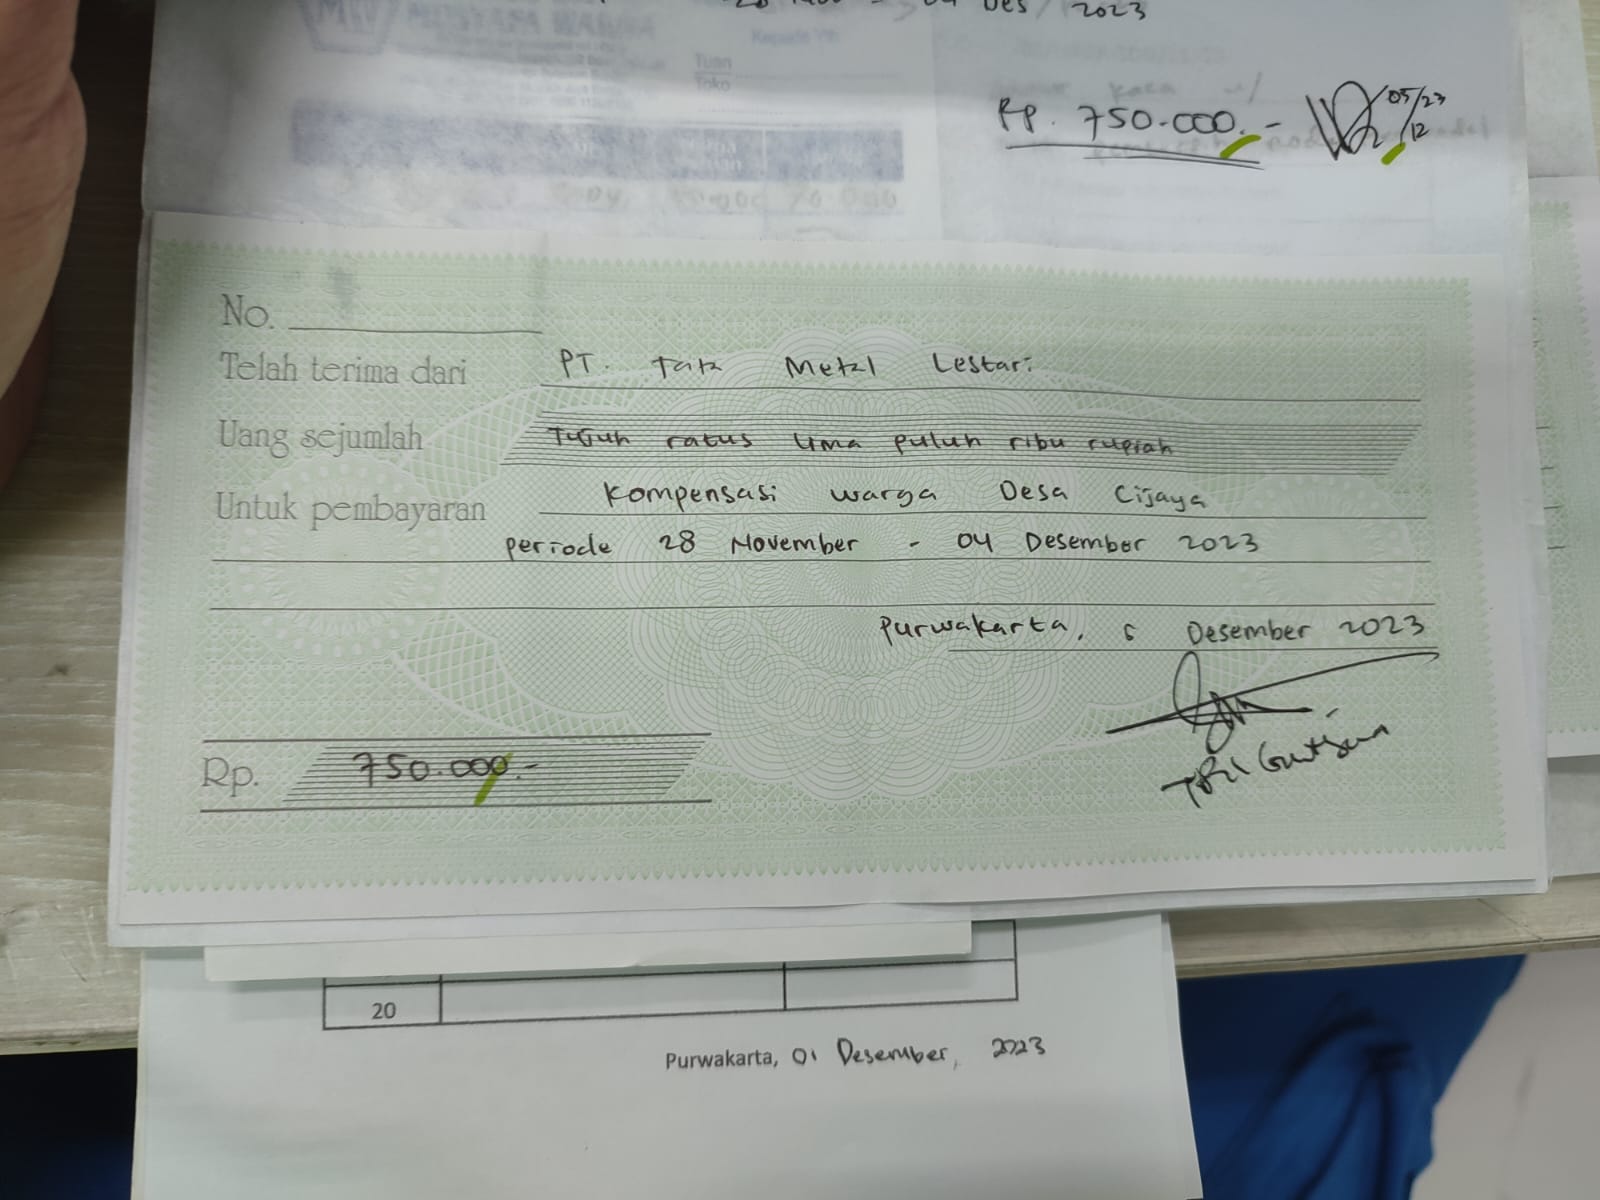 TML - Pemberian kompensasi kepada warga desa cijaya periode 28 November - 04 Desember2023